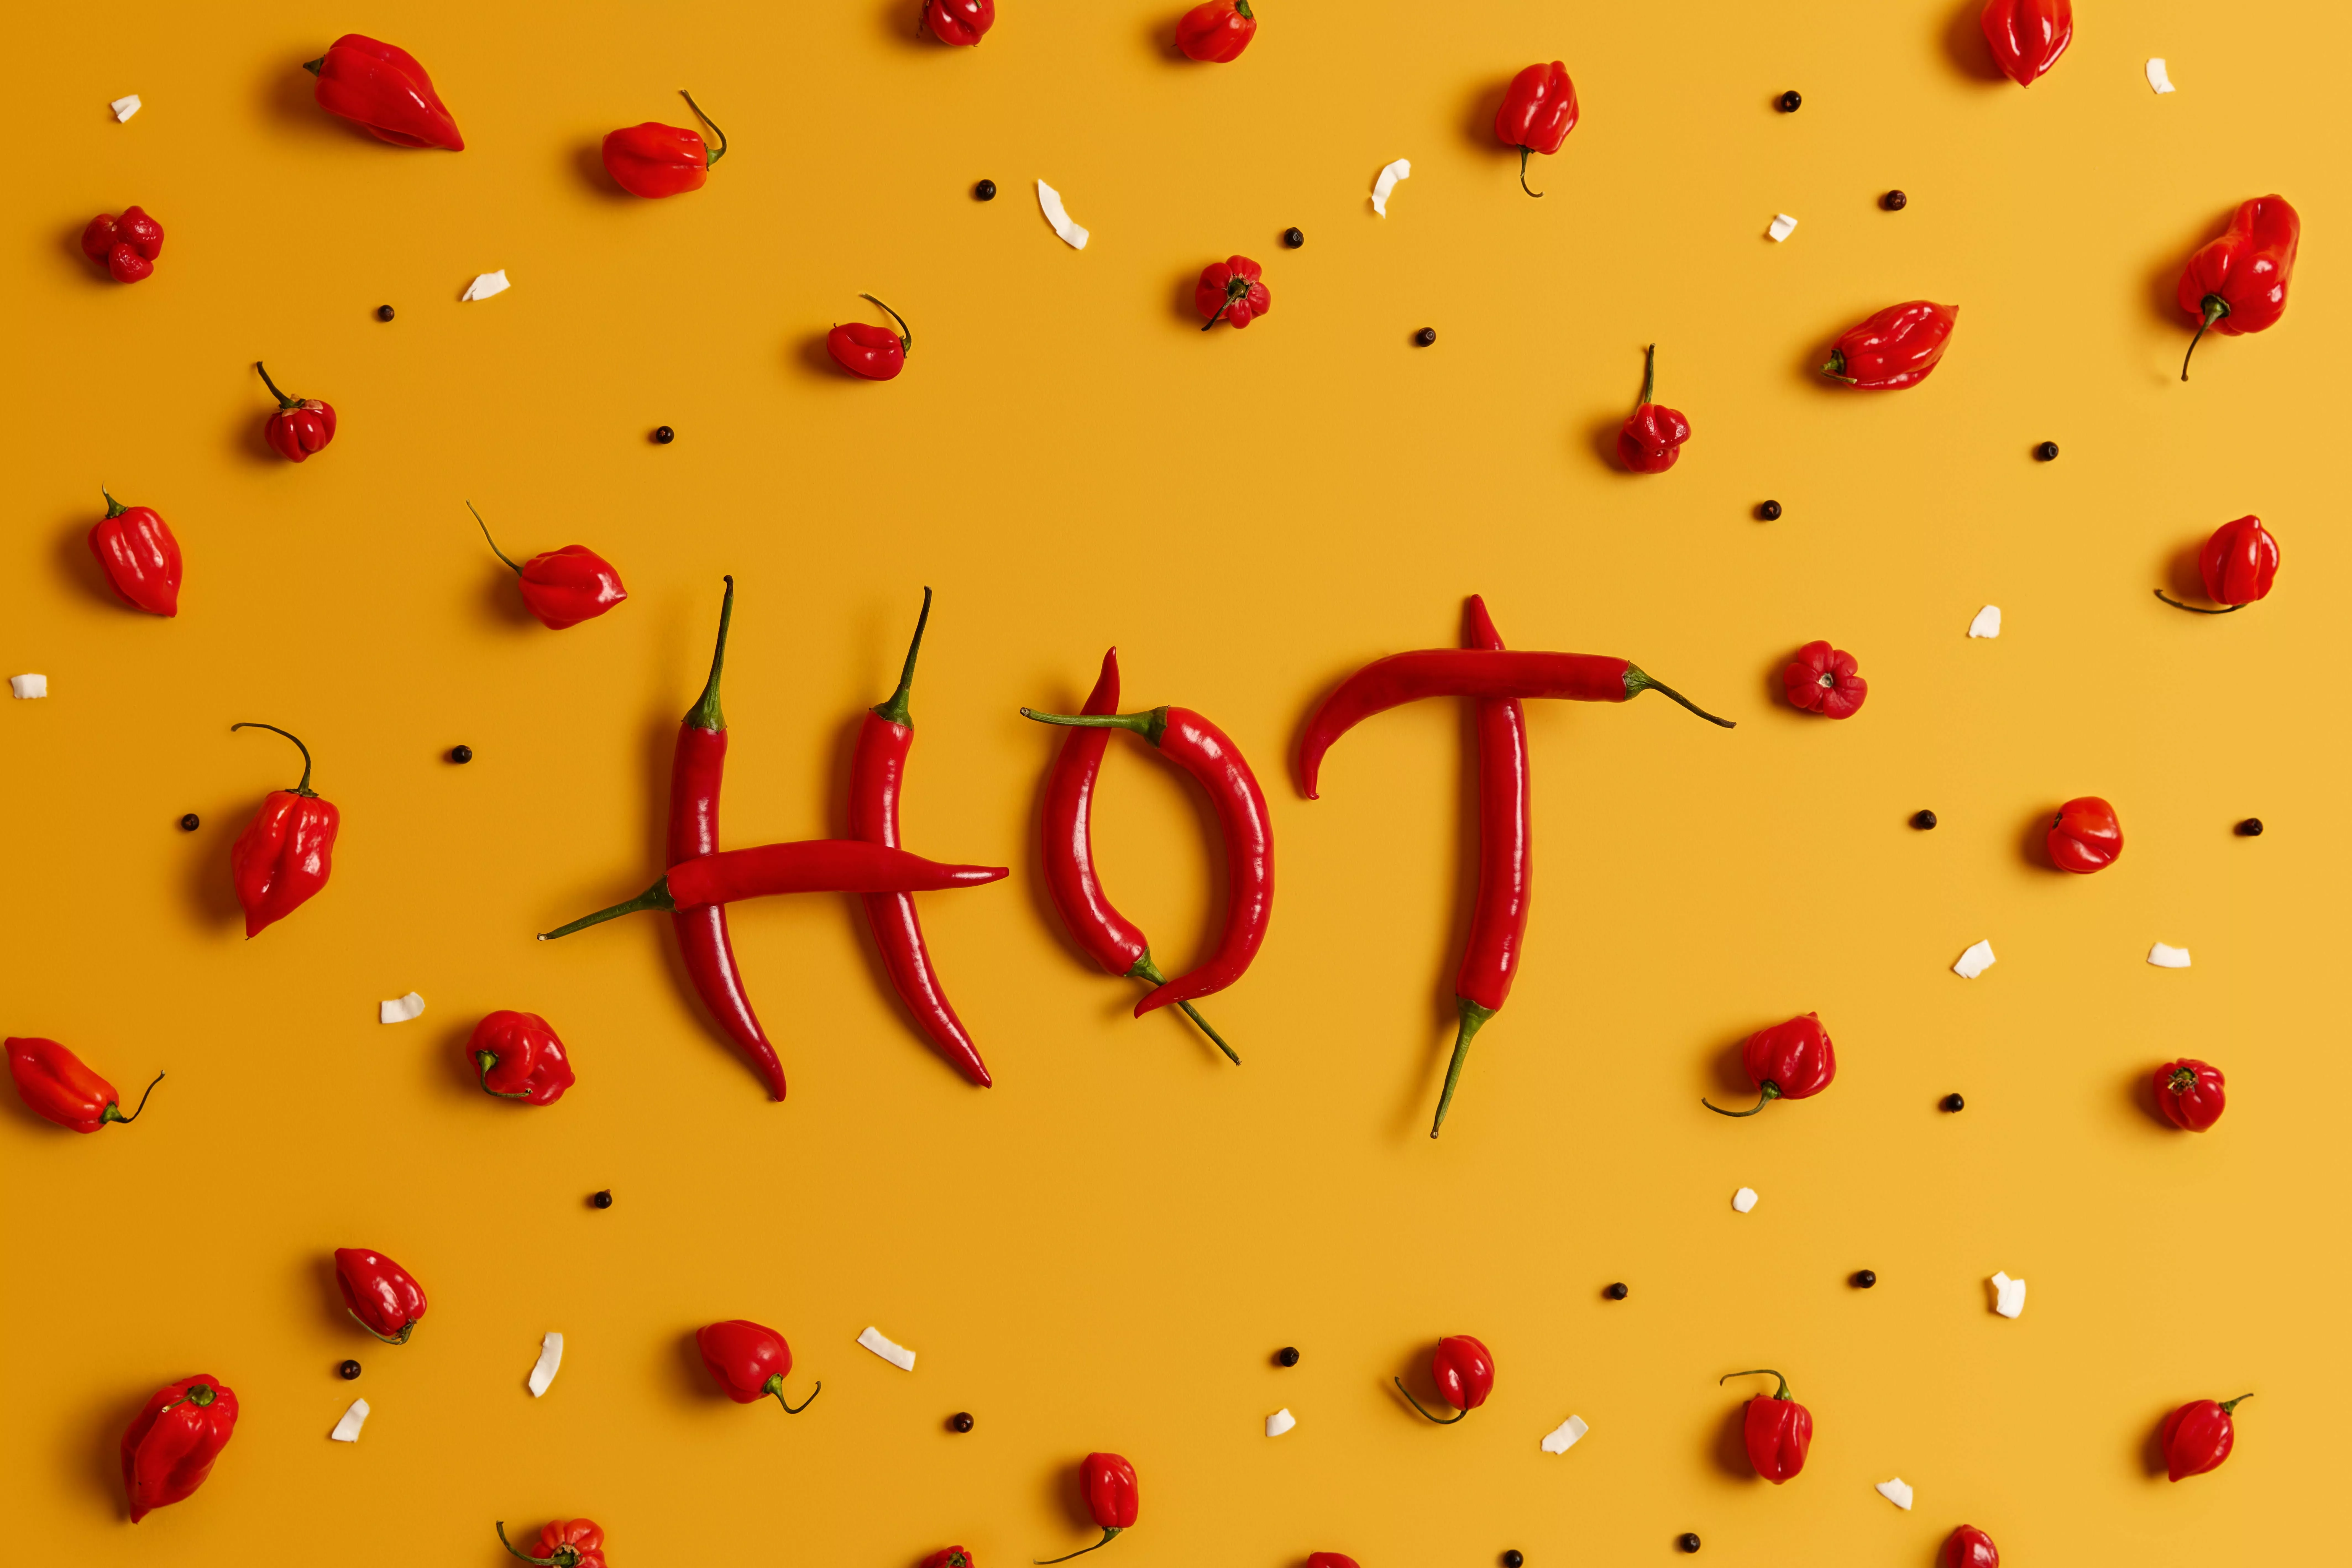 hot chillies